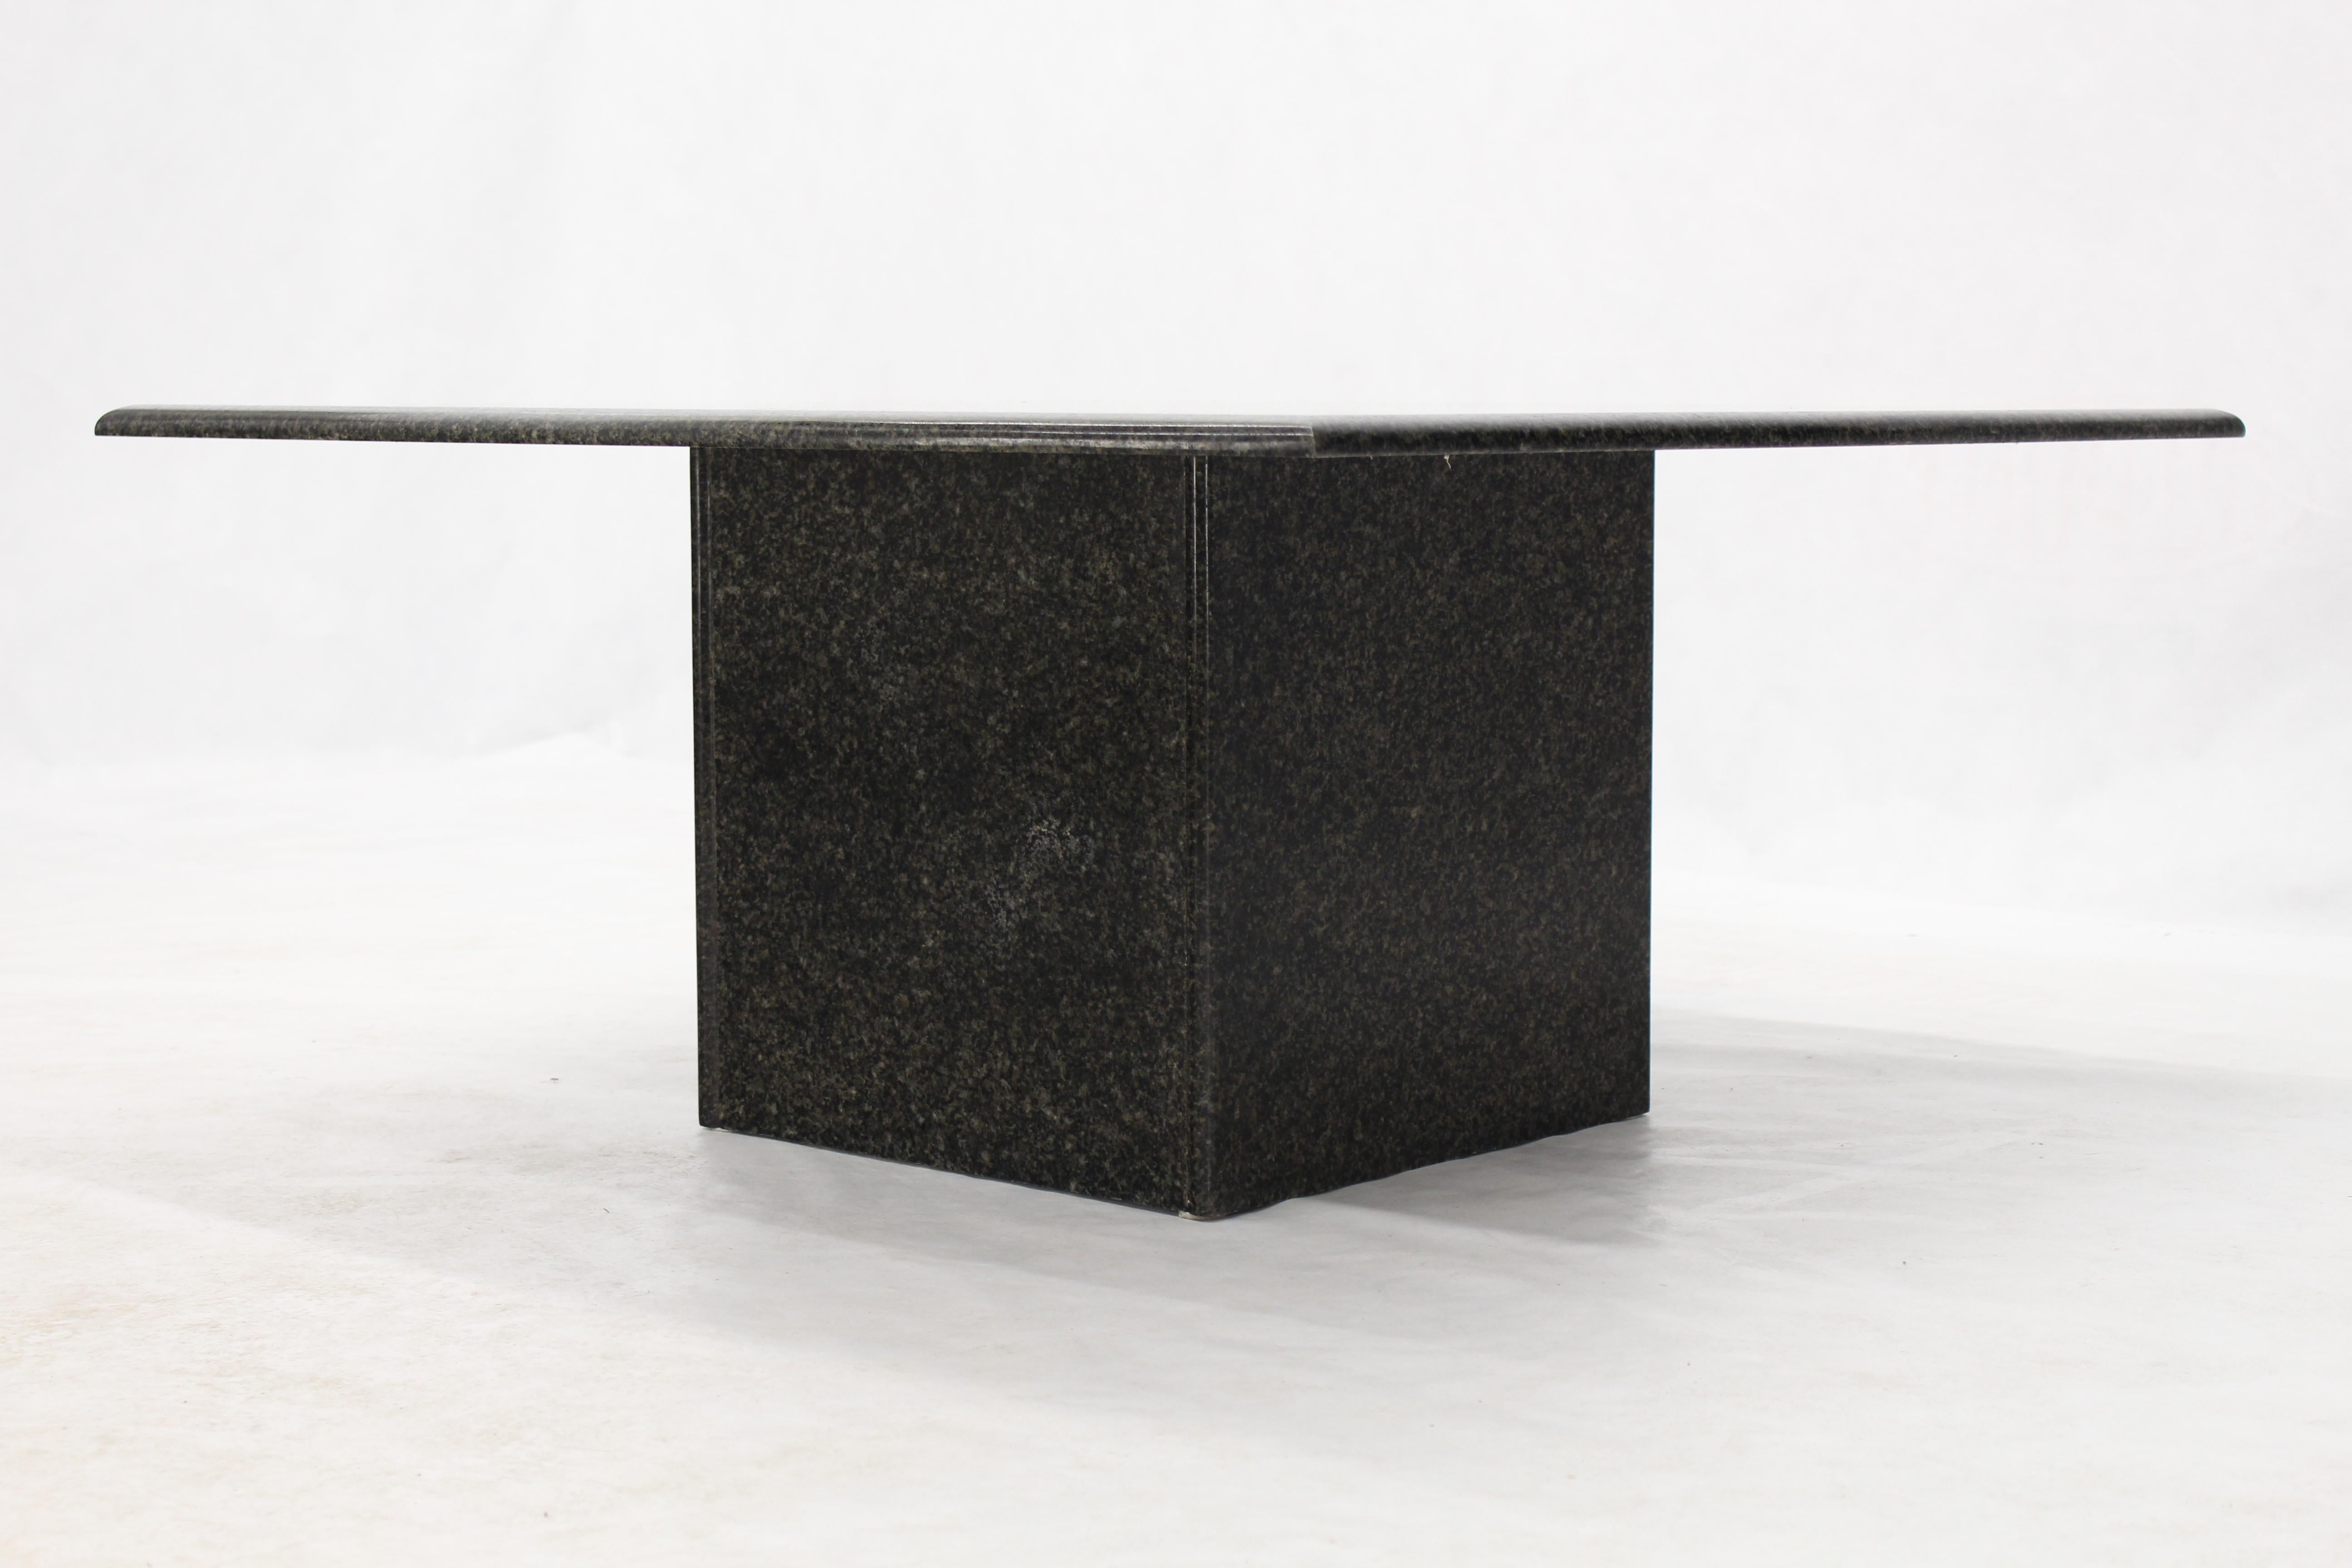 Square Black Granite Pedestal Base Coffee Table In Excellent Condition For Sale In Rockaway, NJ